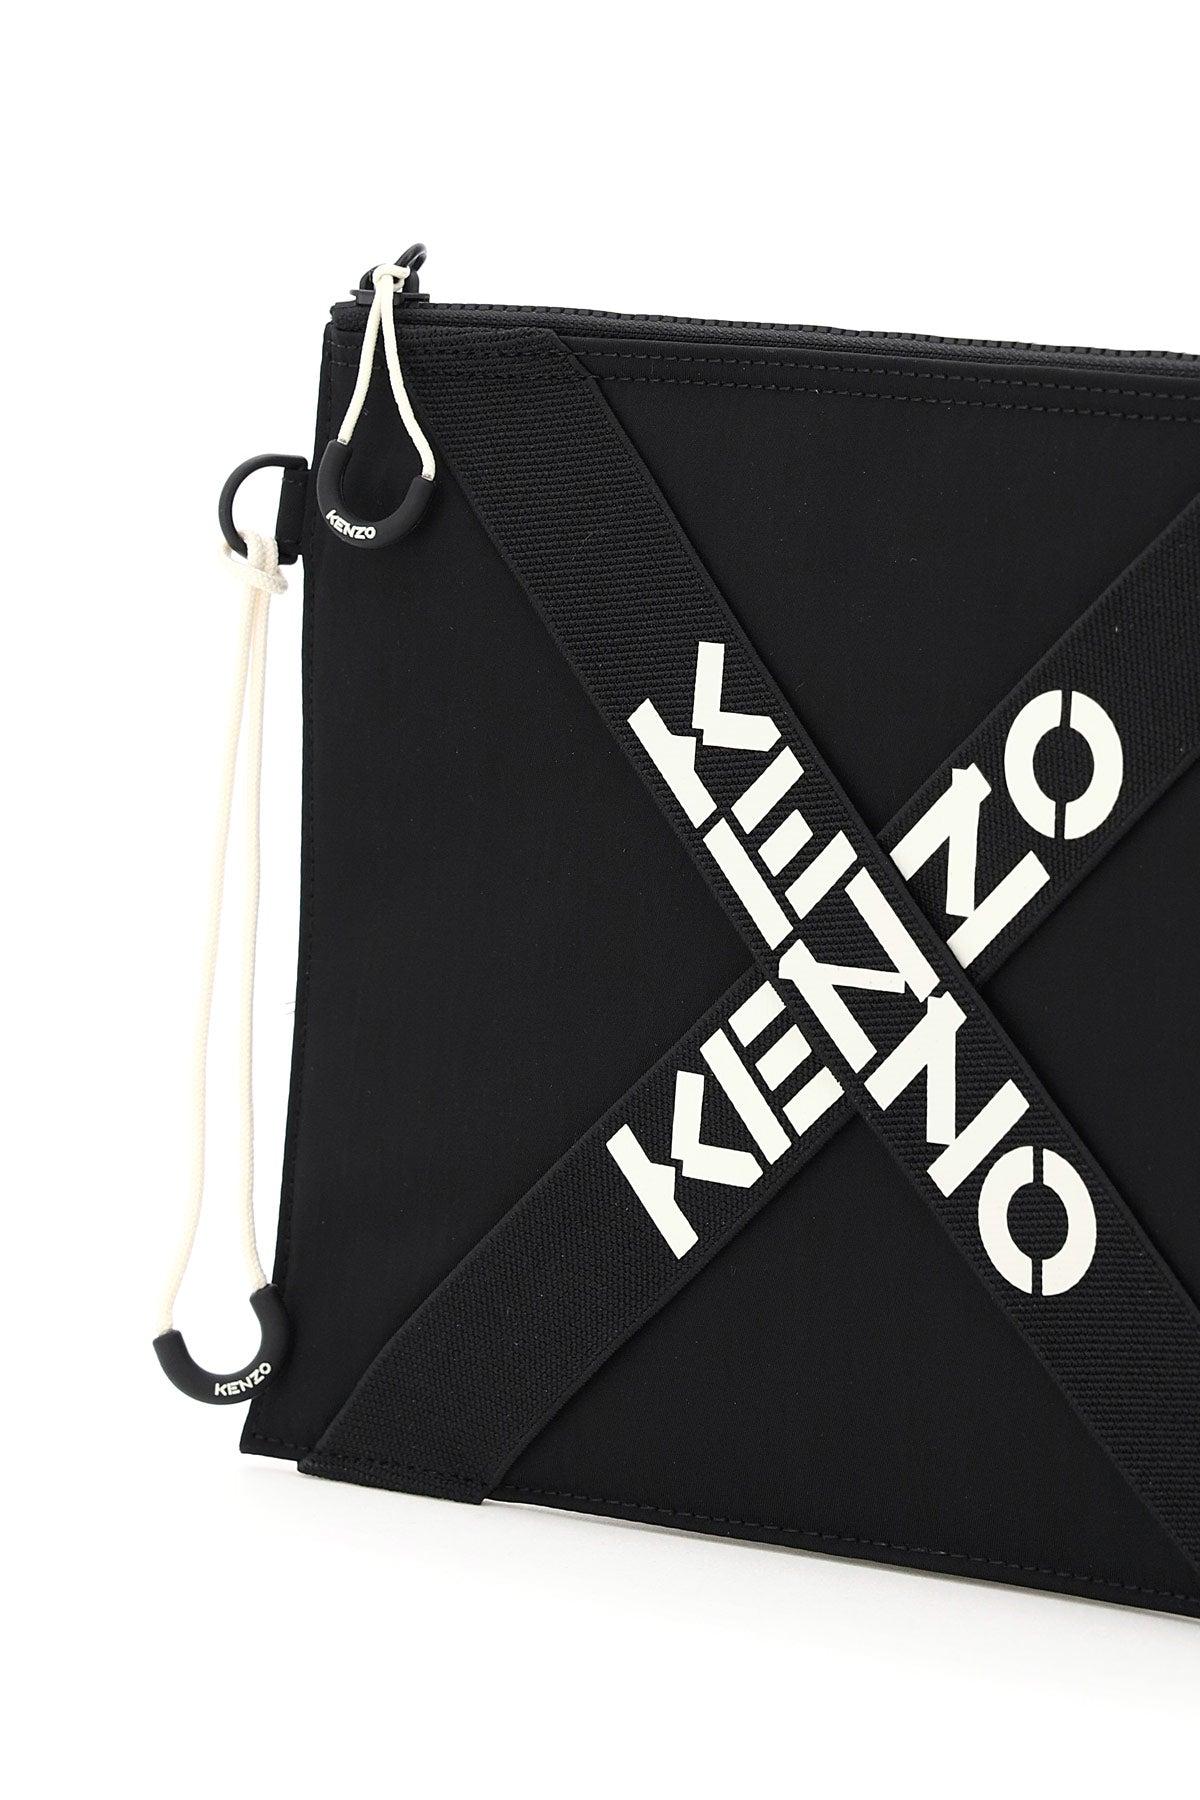 KENZO Synthetic Large Pouch Cross Logo in Black for Men - Lyst